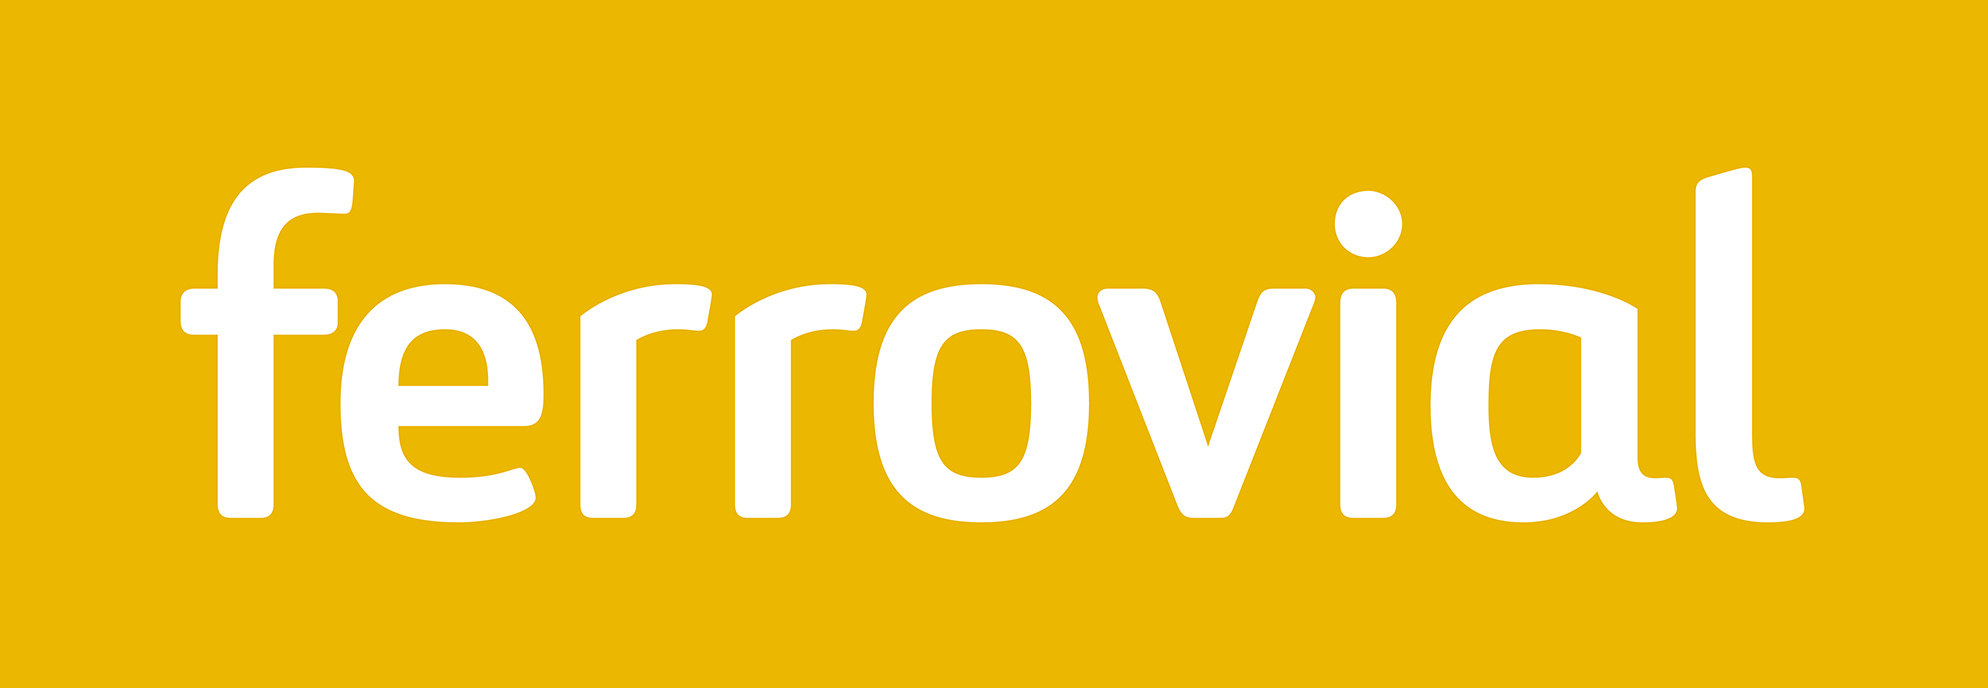 Ferrovial Brand Logo